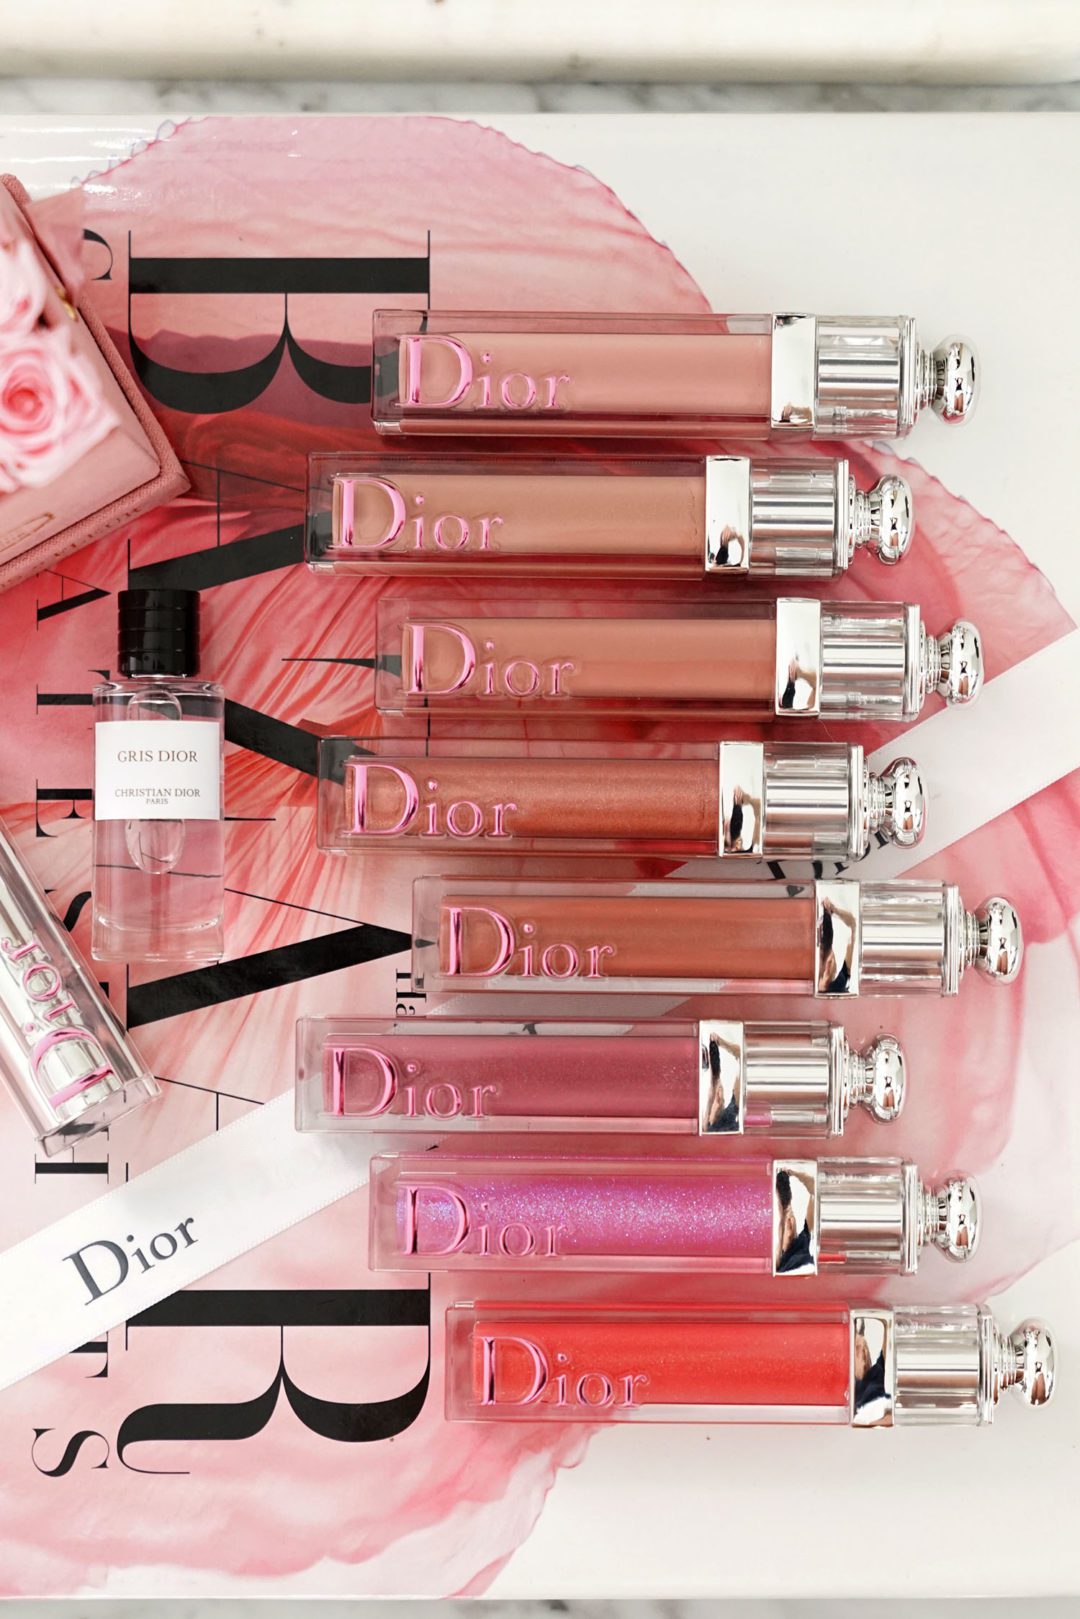 Dior Addict Stellar Gloss Stellar Halo Shine Lipsticks The Beauty Look Book 